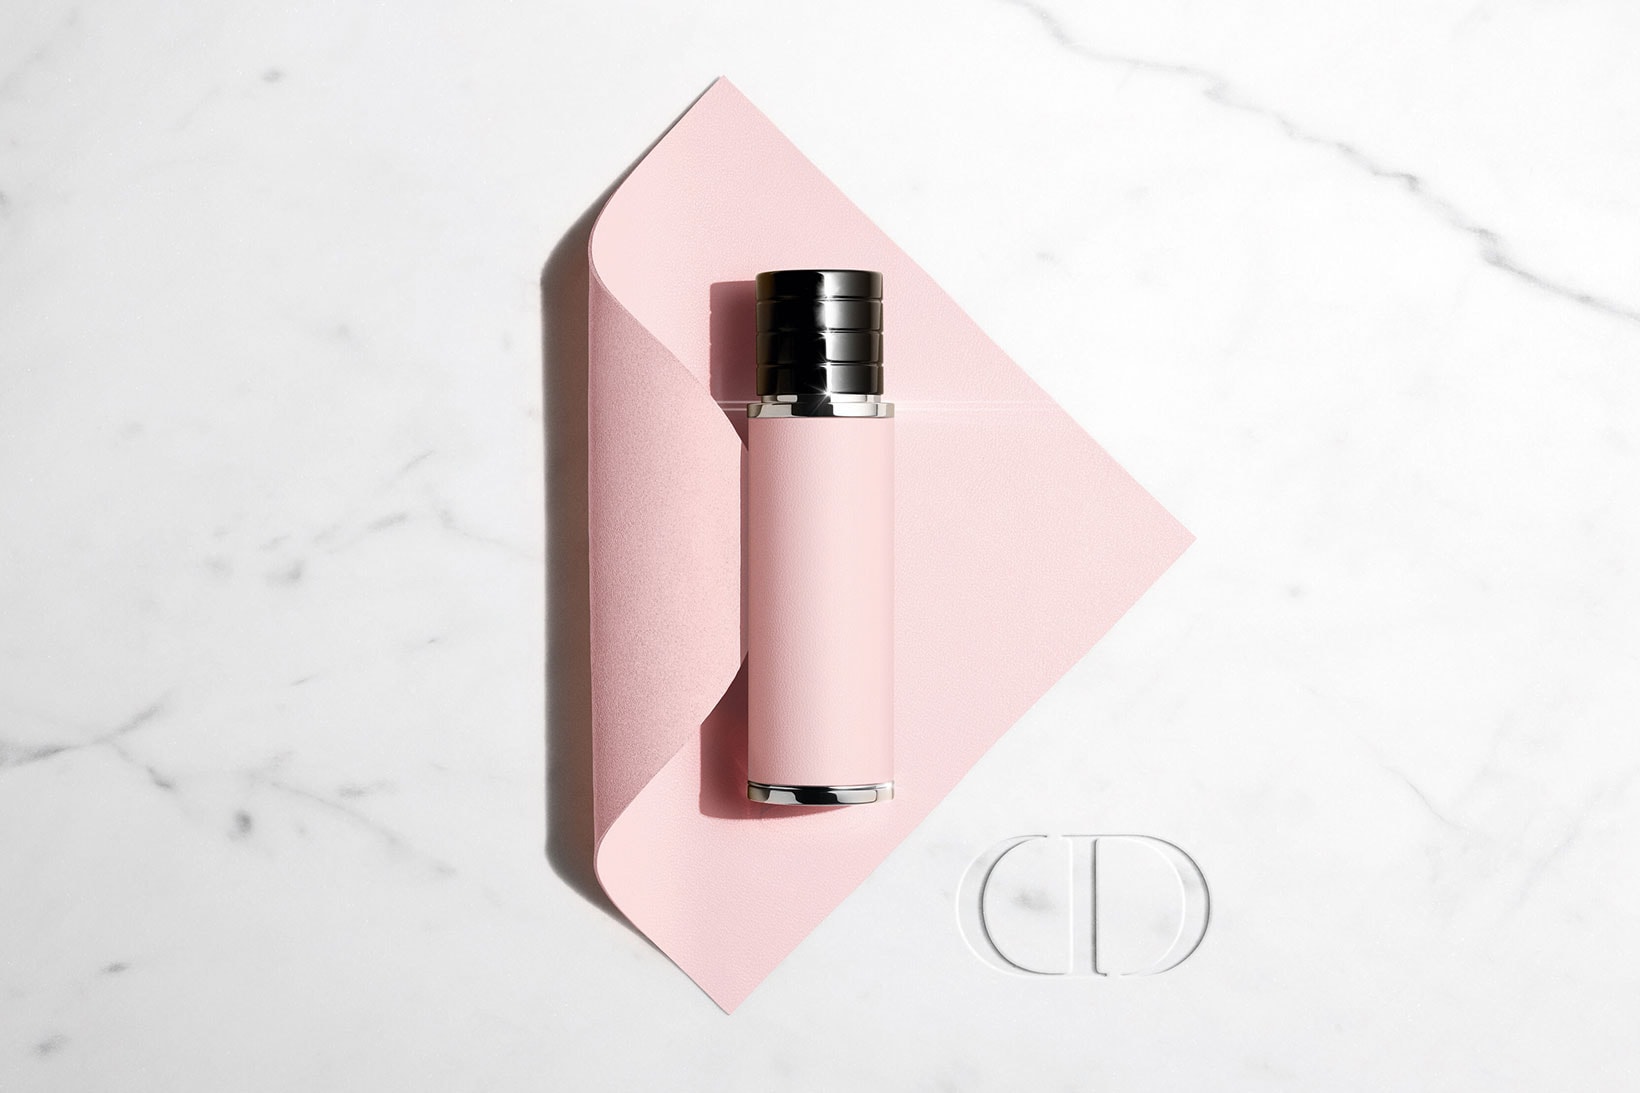 maison christian dior perfume purse spray fragrance scent refill case bottle pink